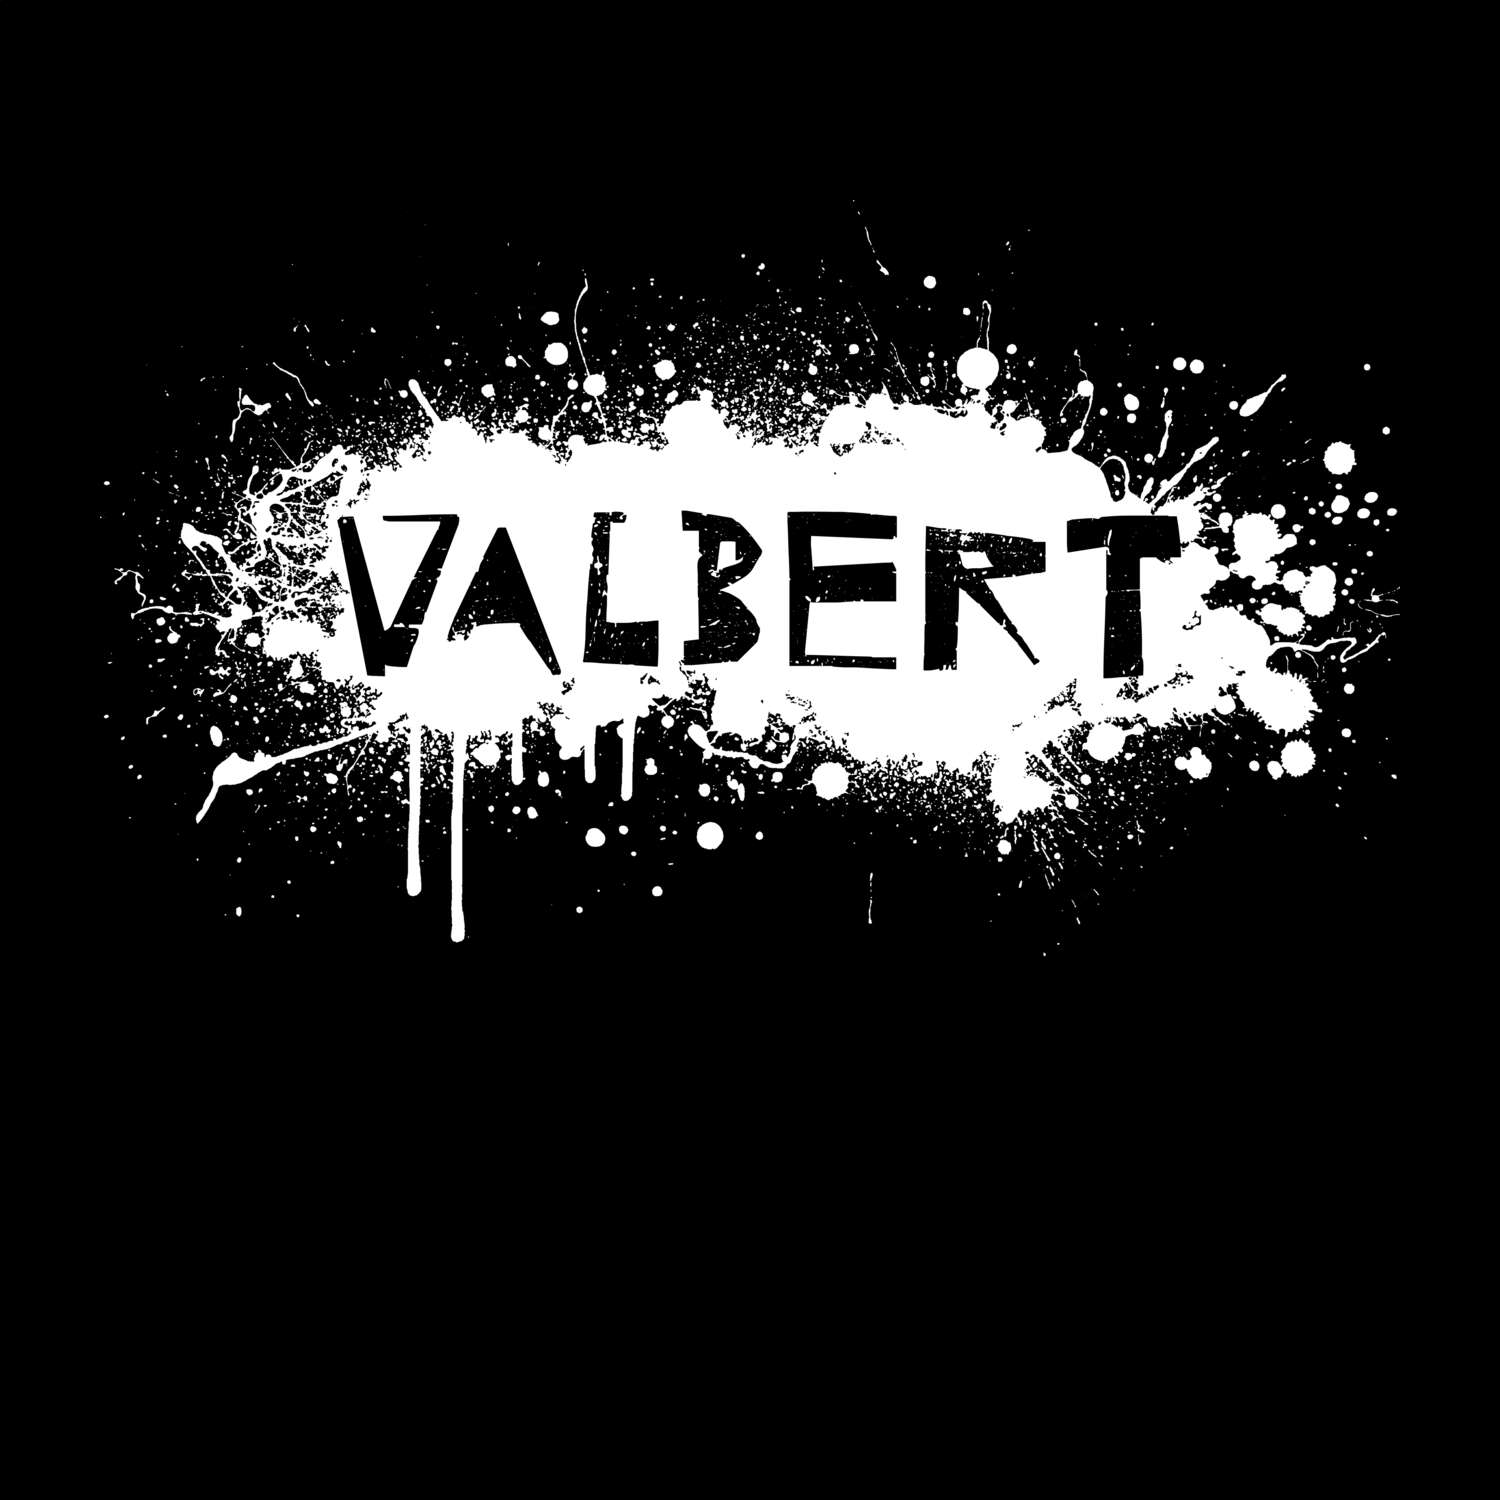 Valbert T-Shirt »Paint Splash Punk«